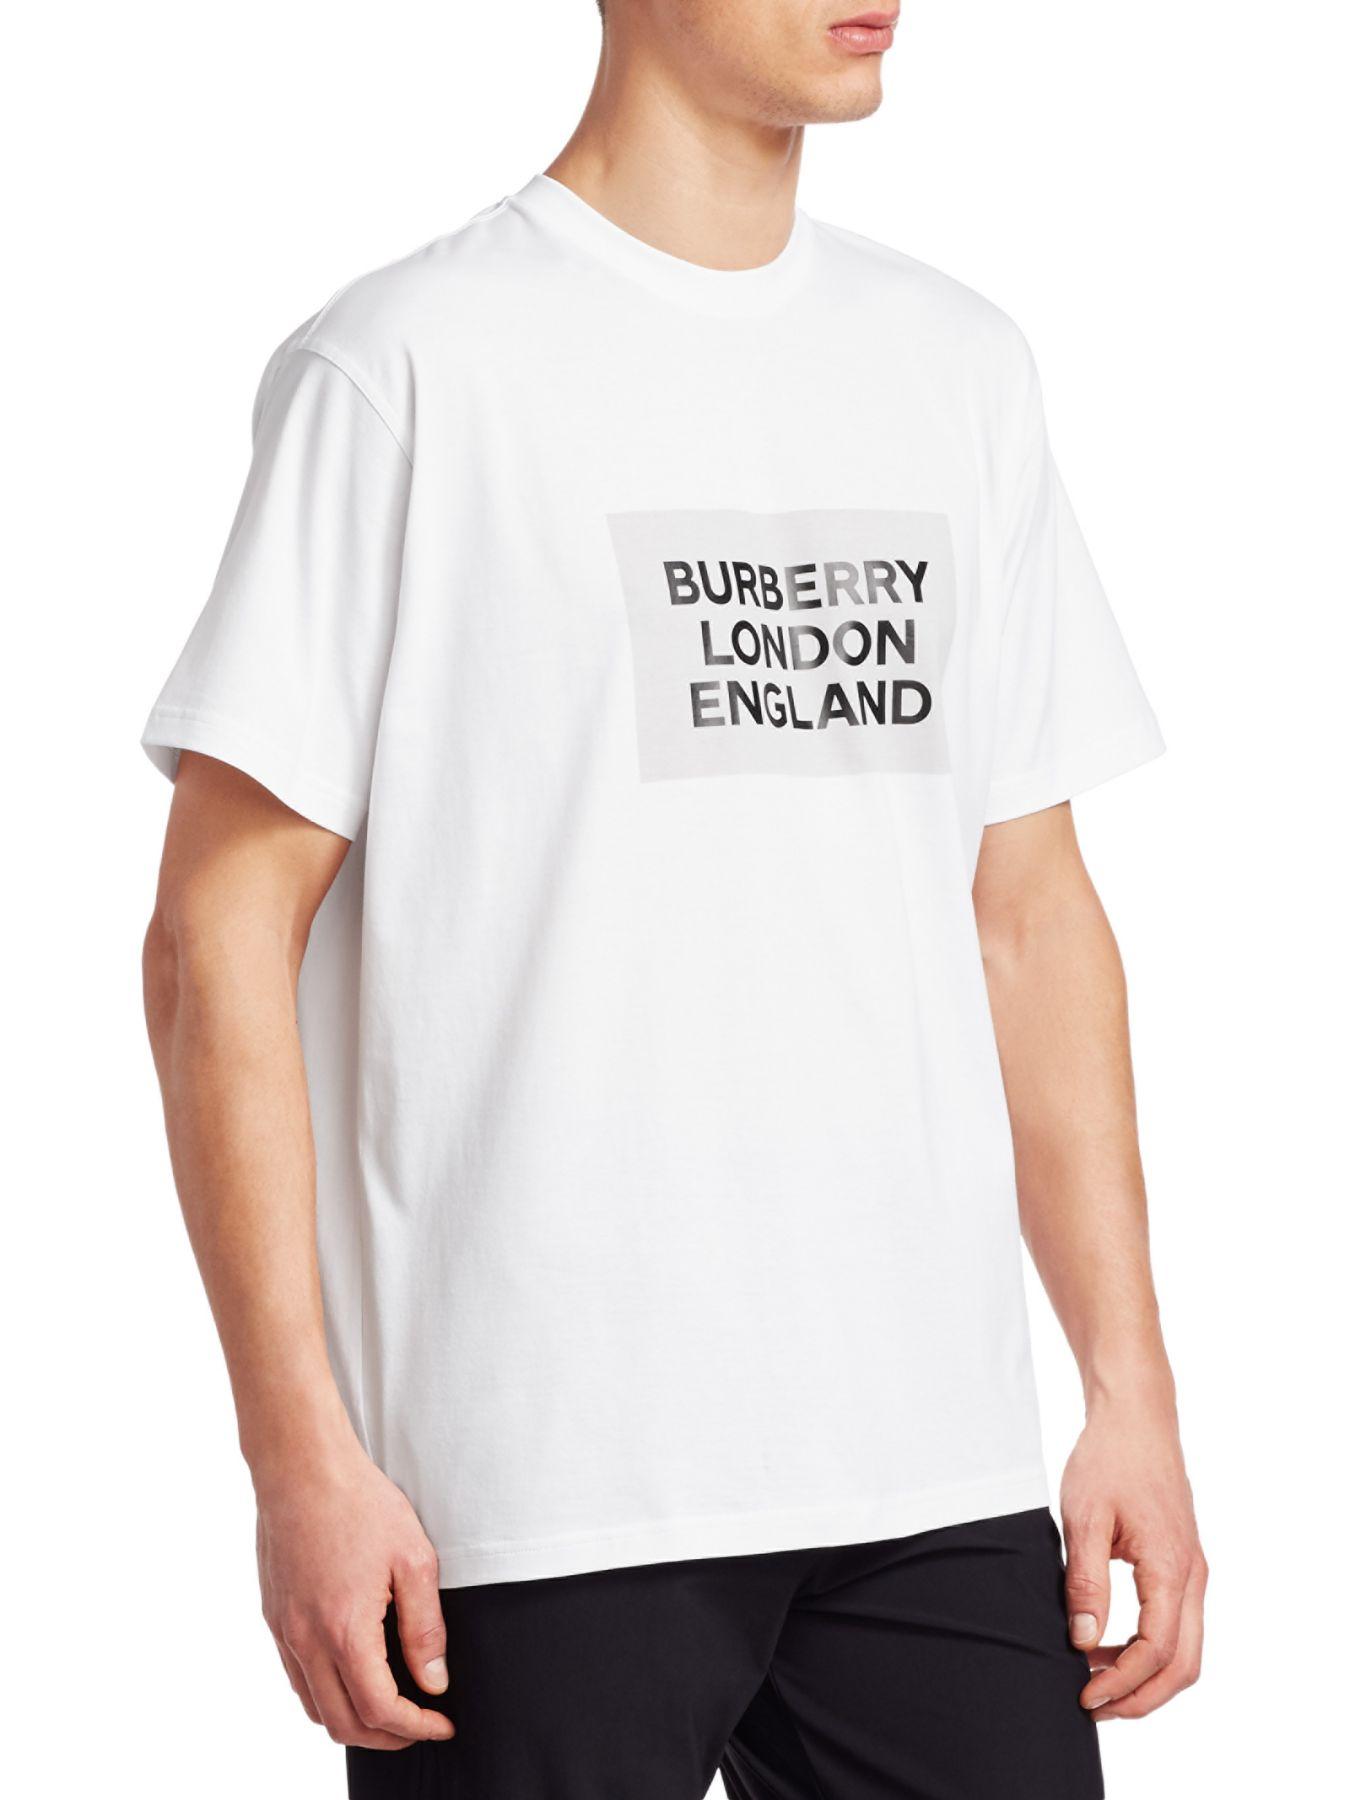 Burberry London England Logo Cotton T-shirt in White for Men - Lyst